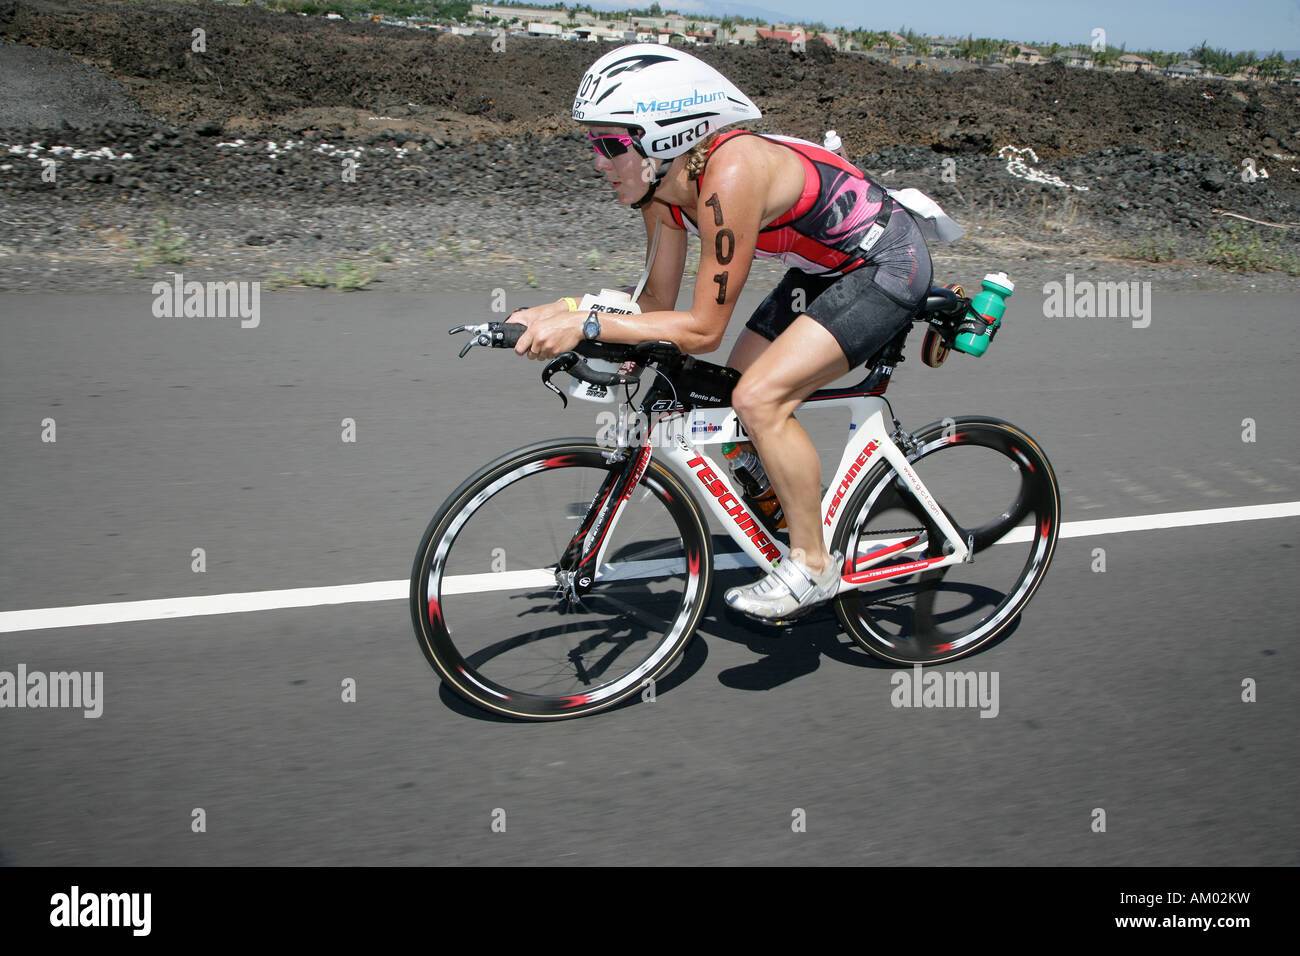 Triathlet Rebekah Keat during the Ironman World Championship in Kailua-Kona Hawaii USA Stock Photo